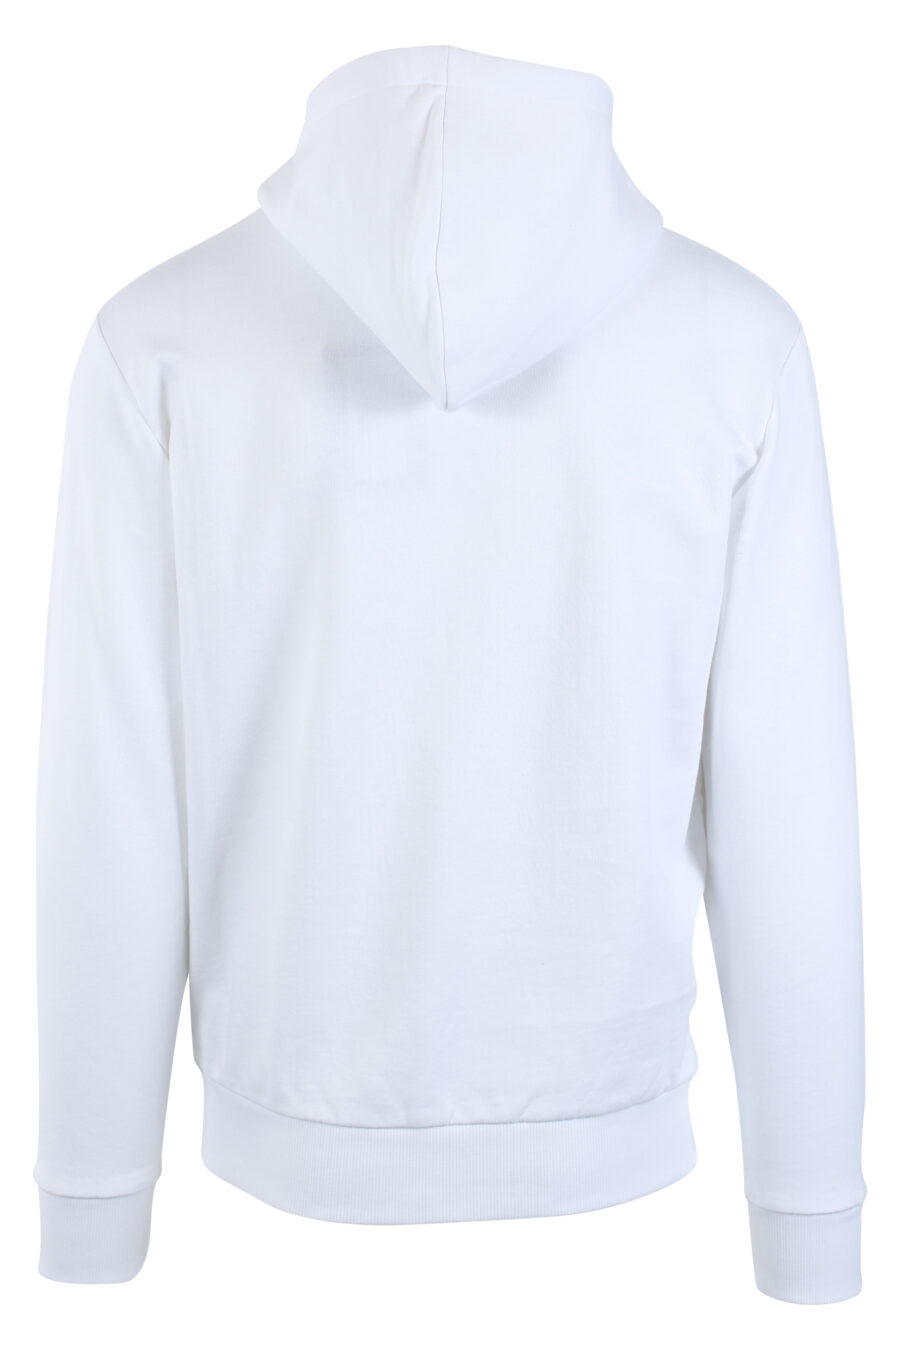 White hooded sweatshirt with black "paris" maxilogue - IMG 2603